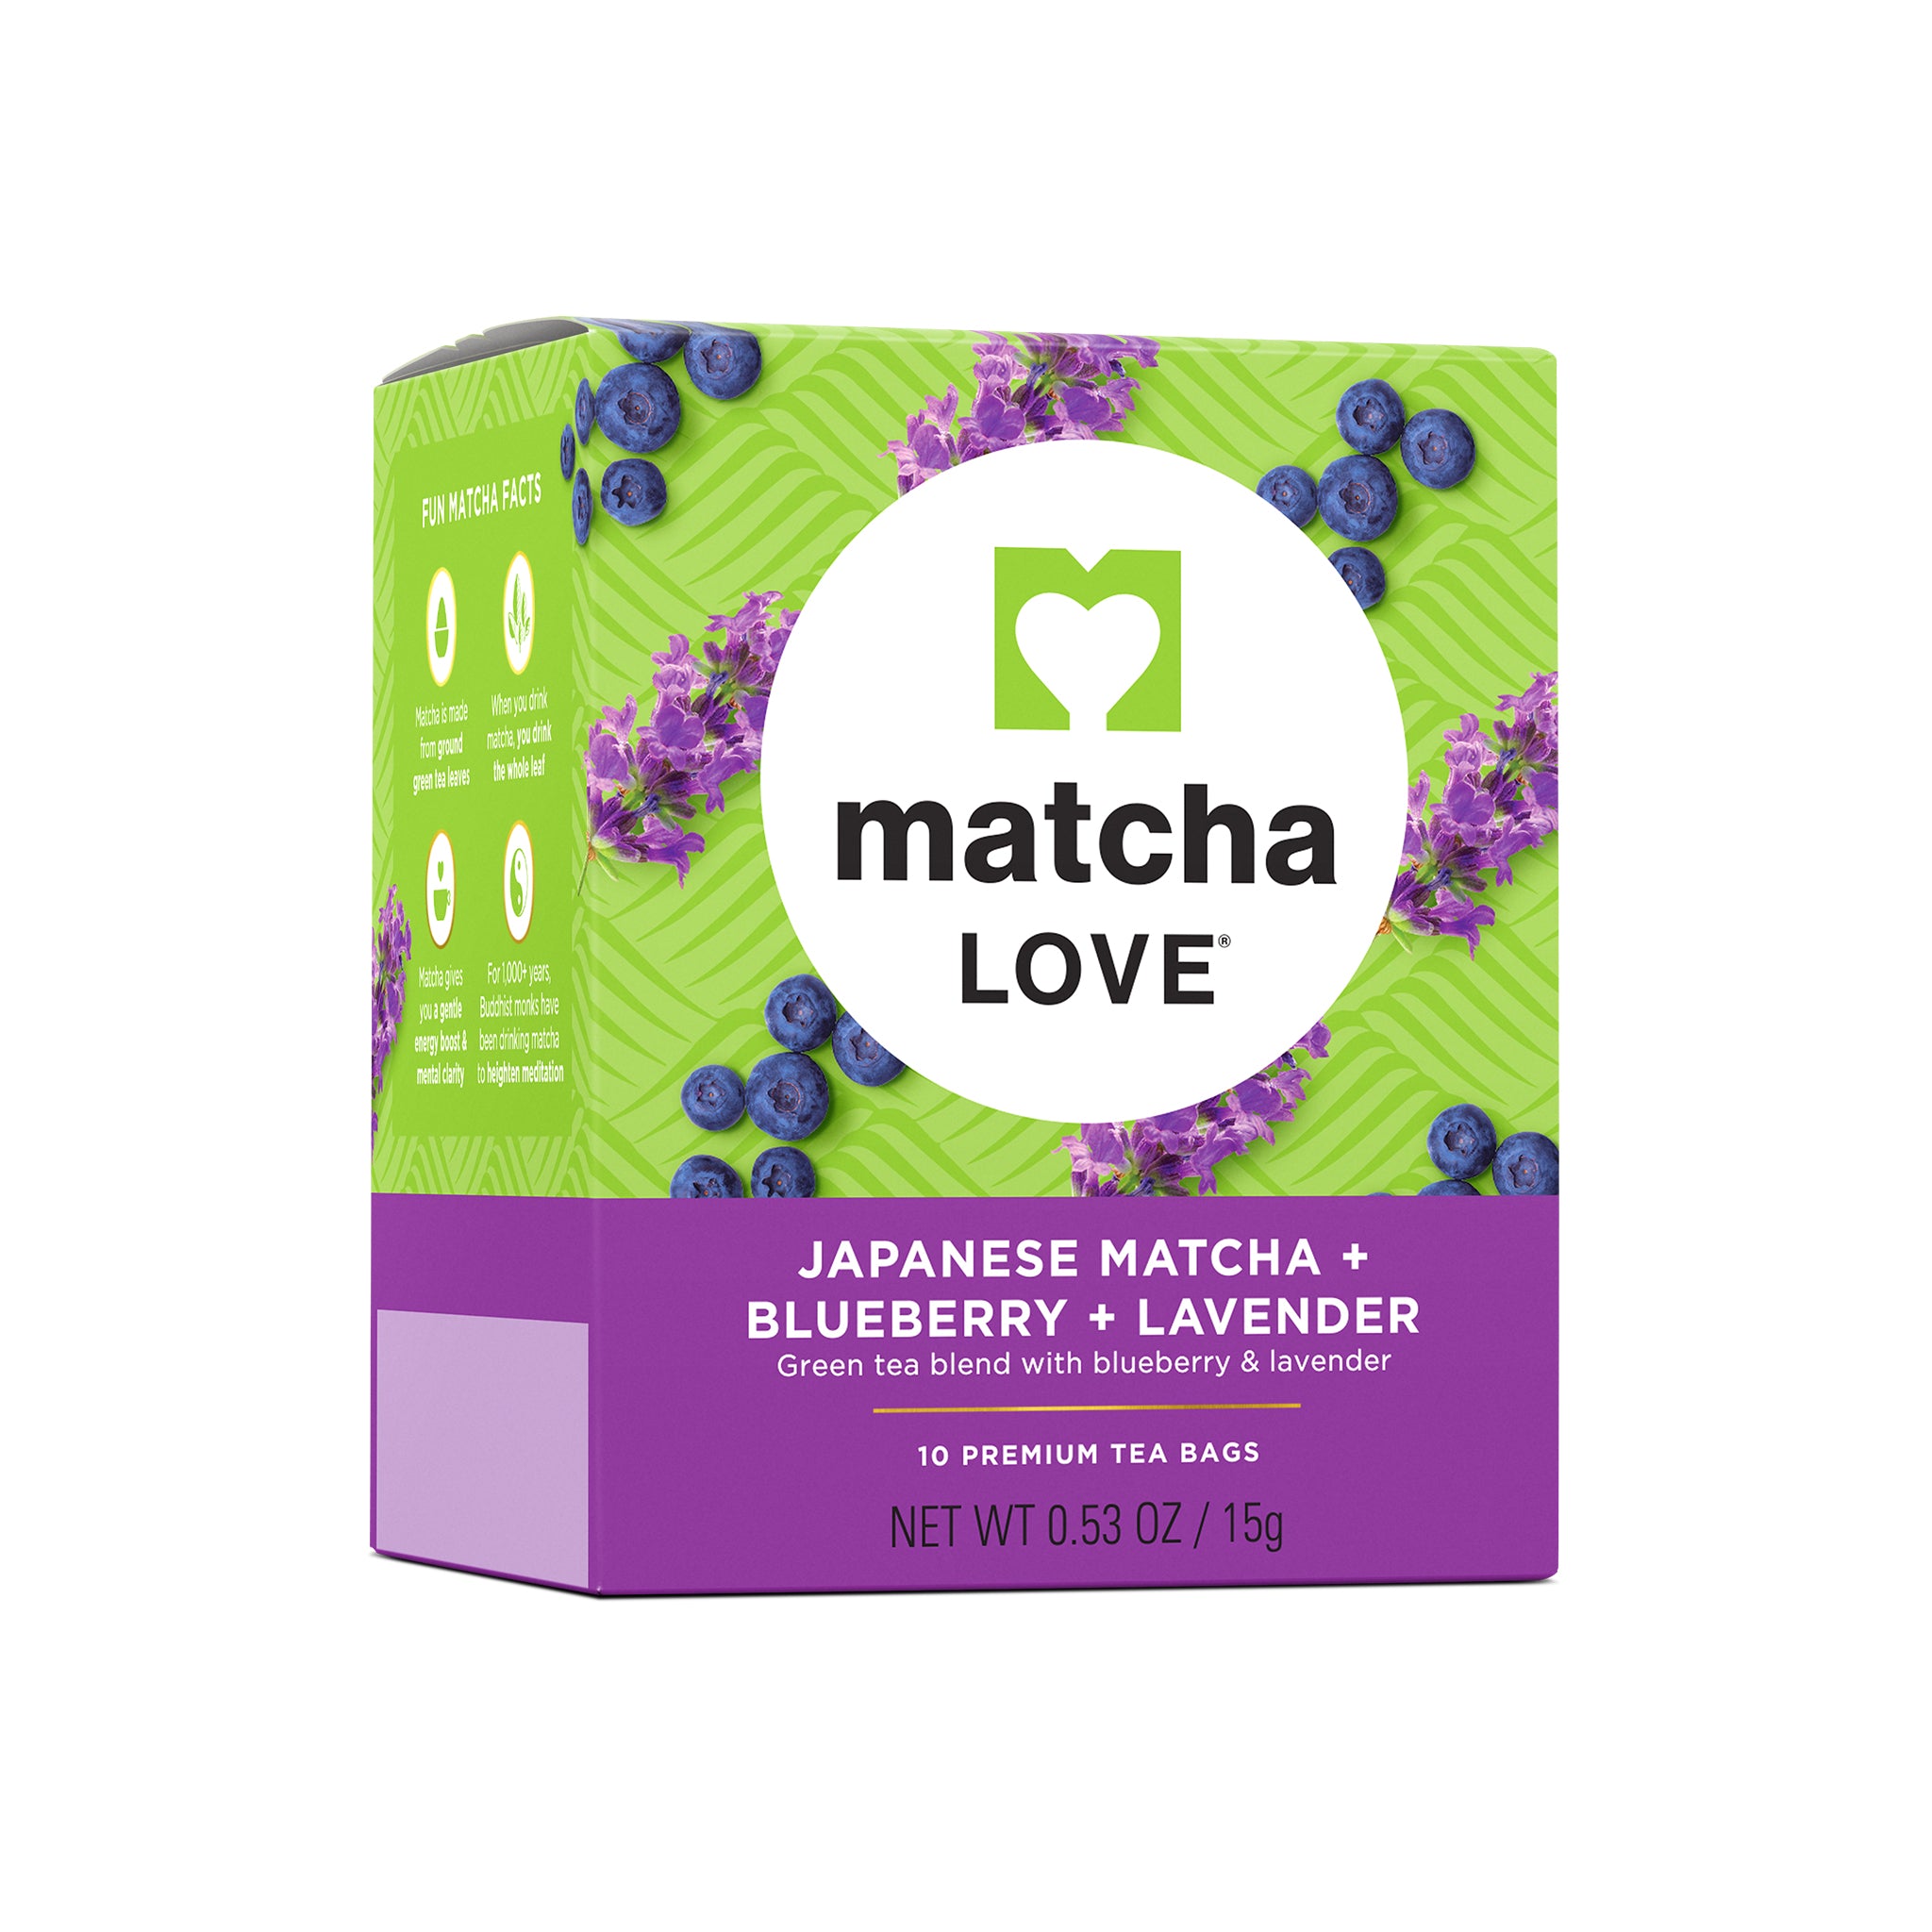 Japanese Matcha + Blueberry + Lavender